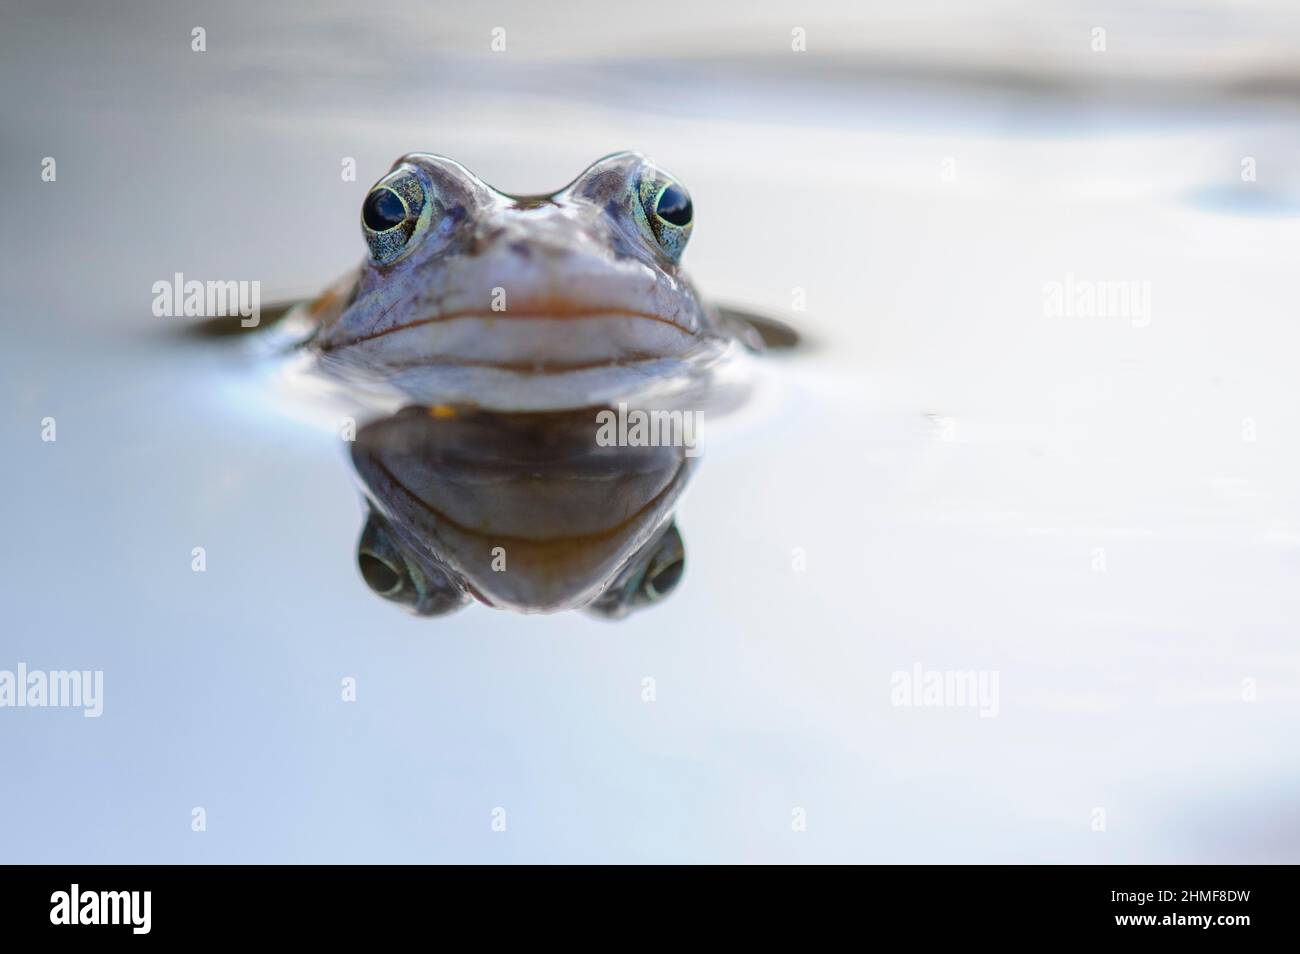 Moor frog, Goldenstedt, Lower Saxony Stock Photo